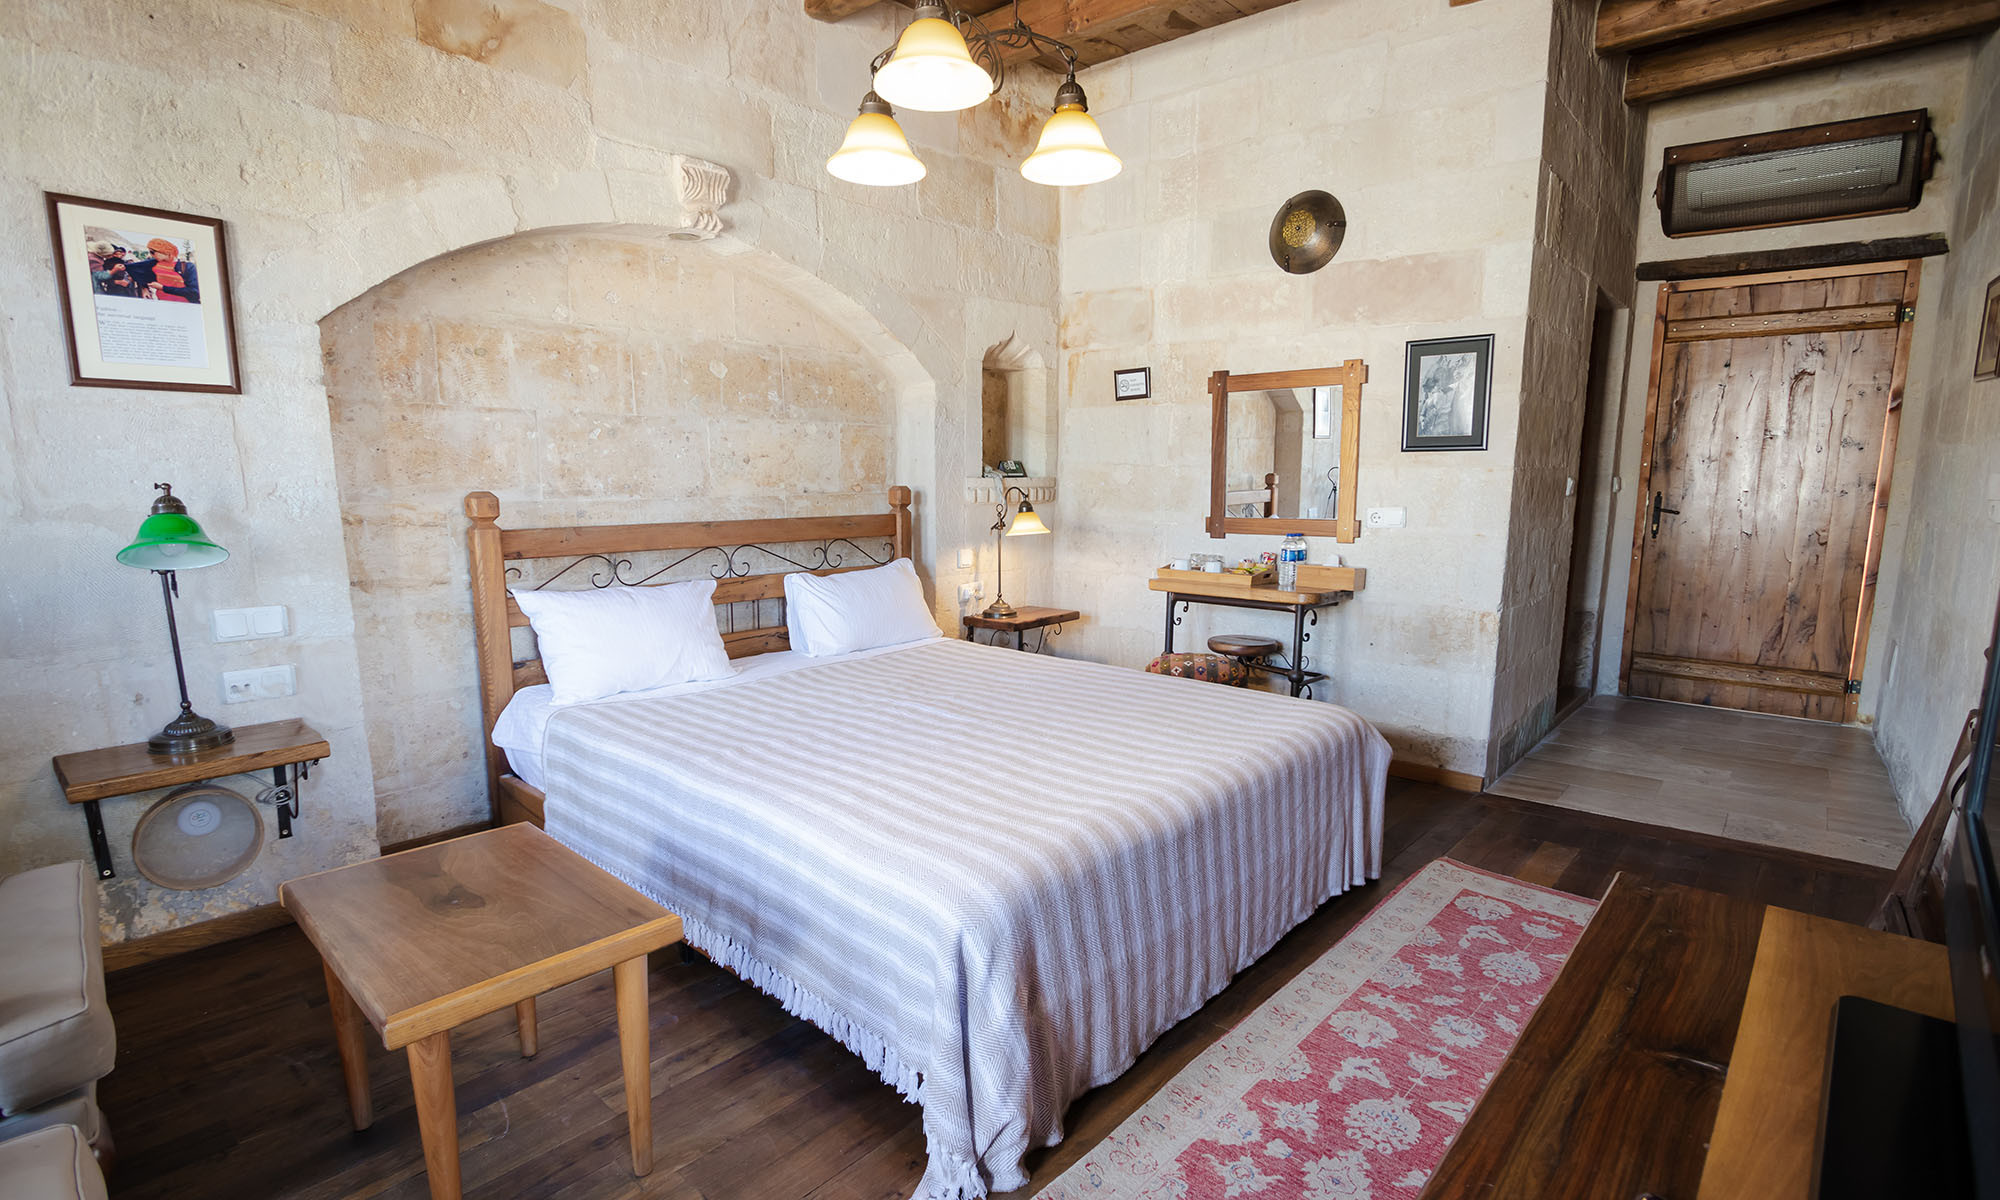 Discover more than 145 dere suites cappadocia latest